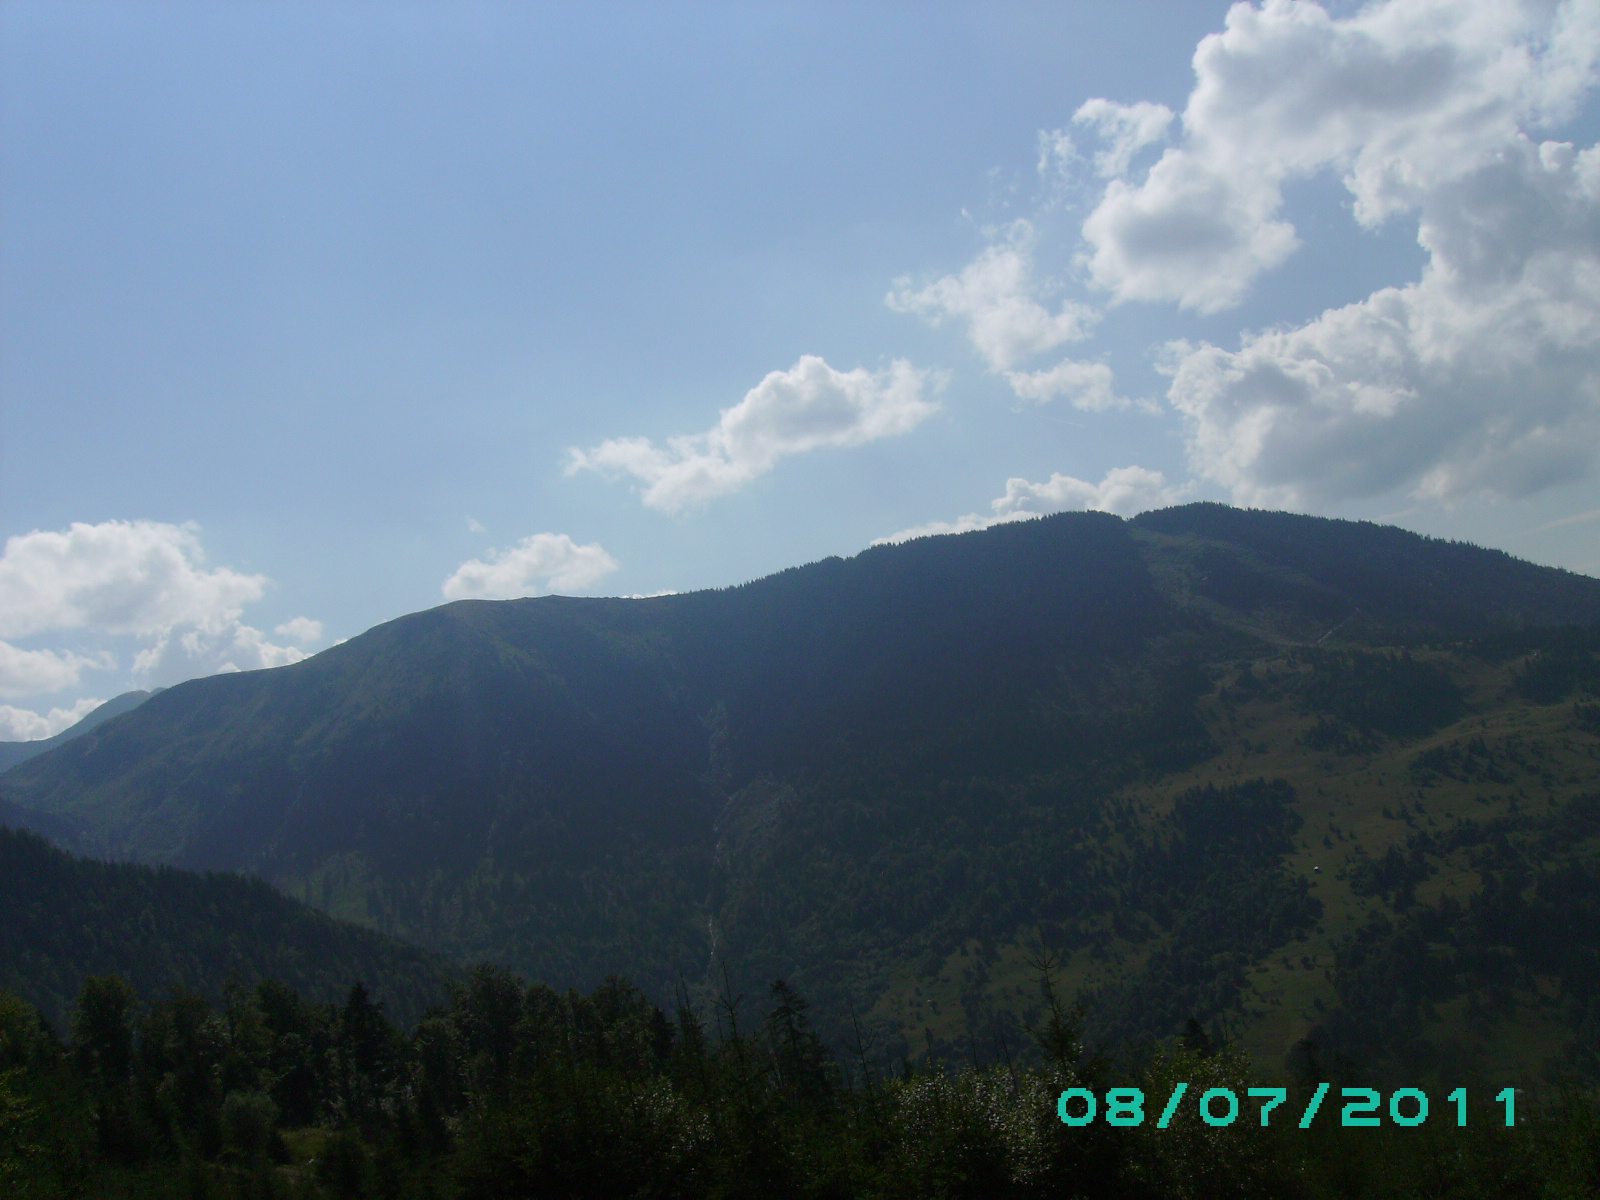 Hai hui prin Maramureş (5)- Cascada Cailor-Borsa